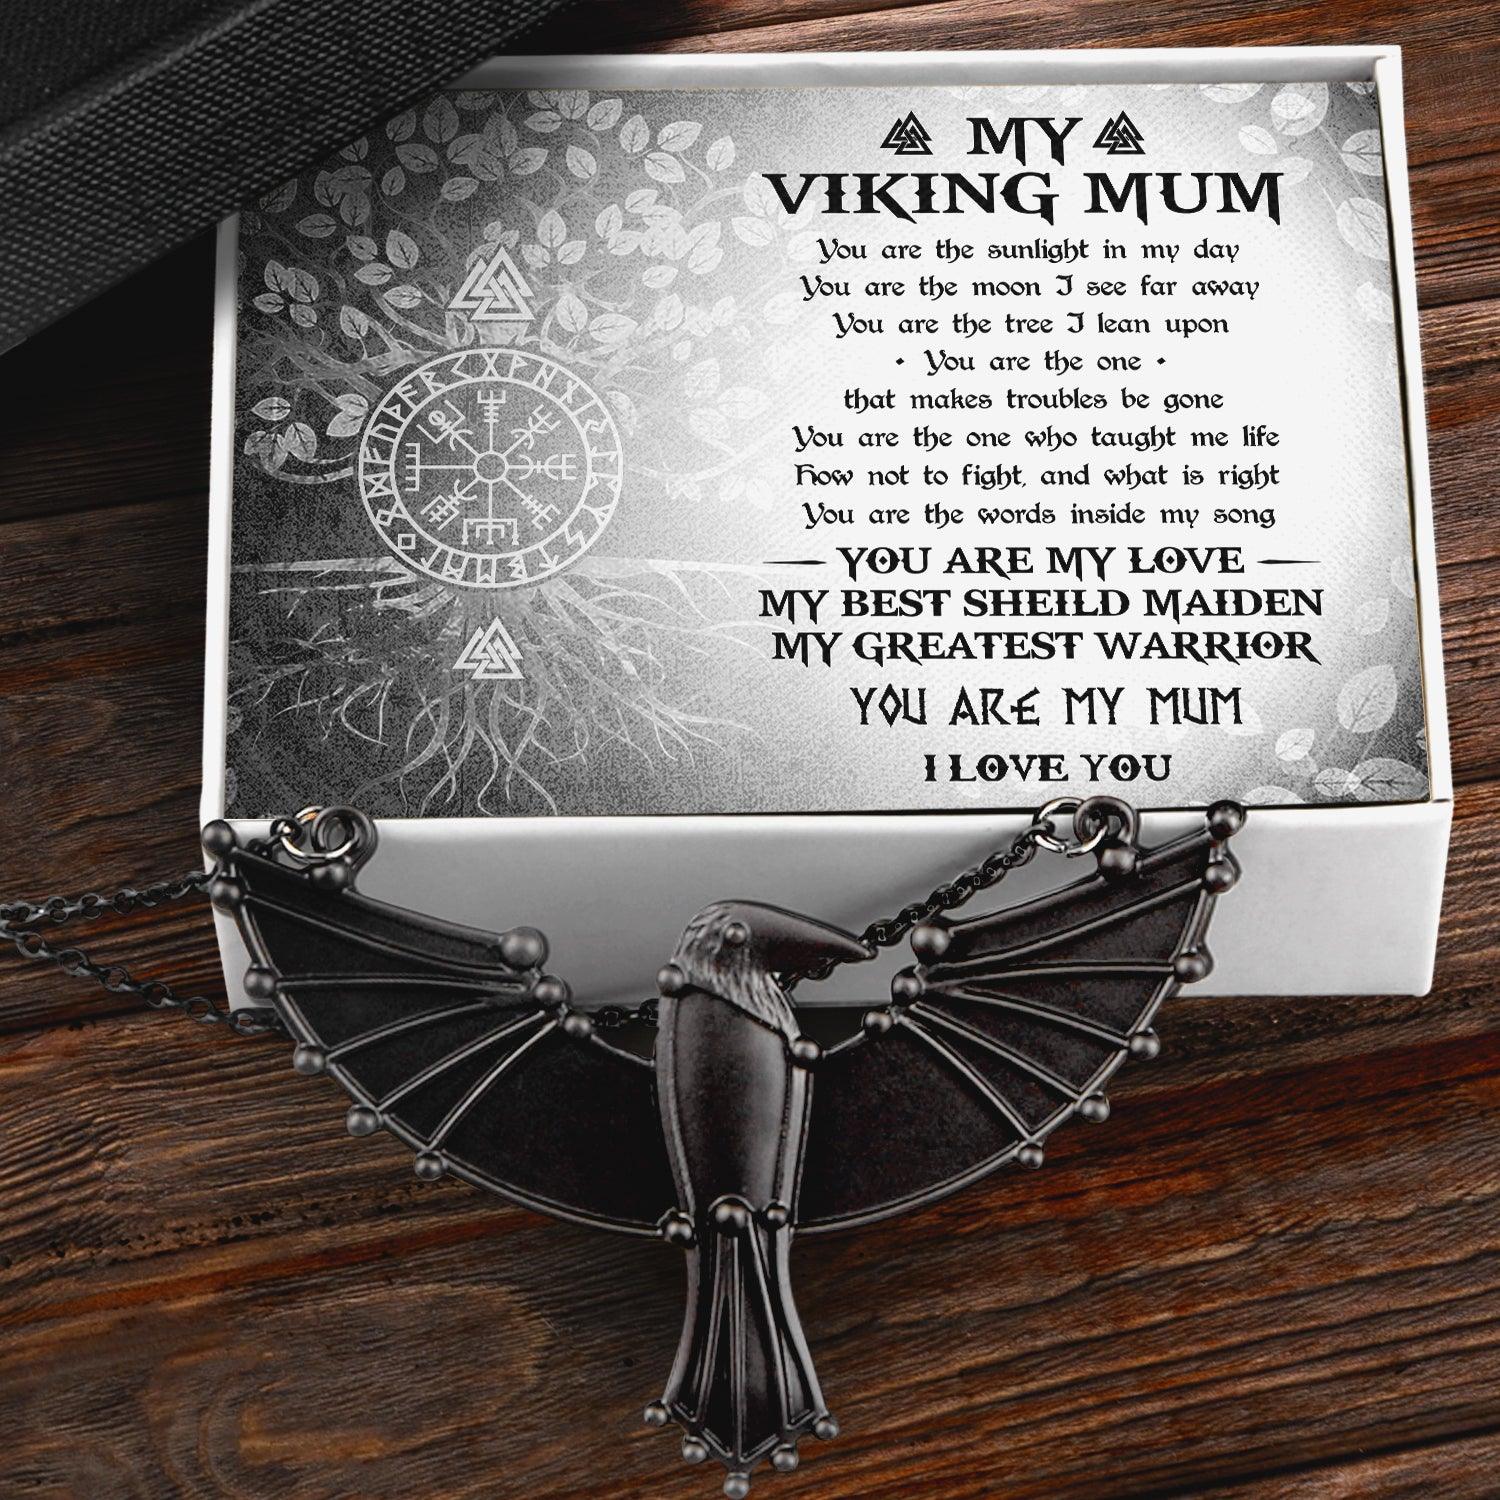 Dark Raven Necklace - To My Viking Mum - You Are My Mum - Augncm19002 - Gifts Holder